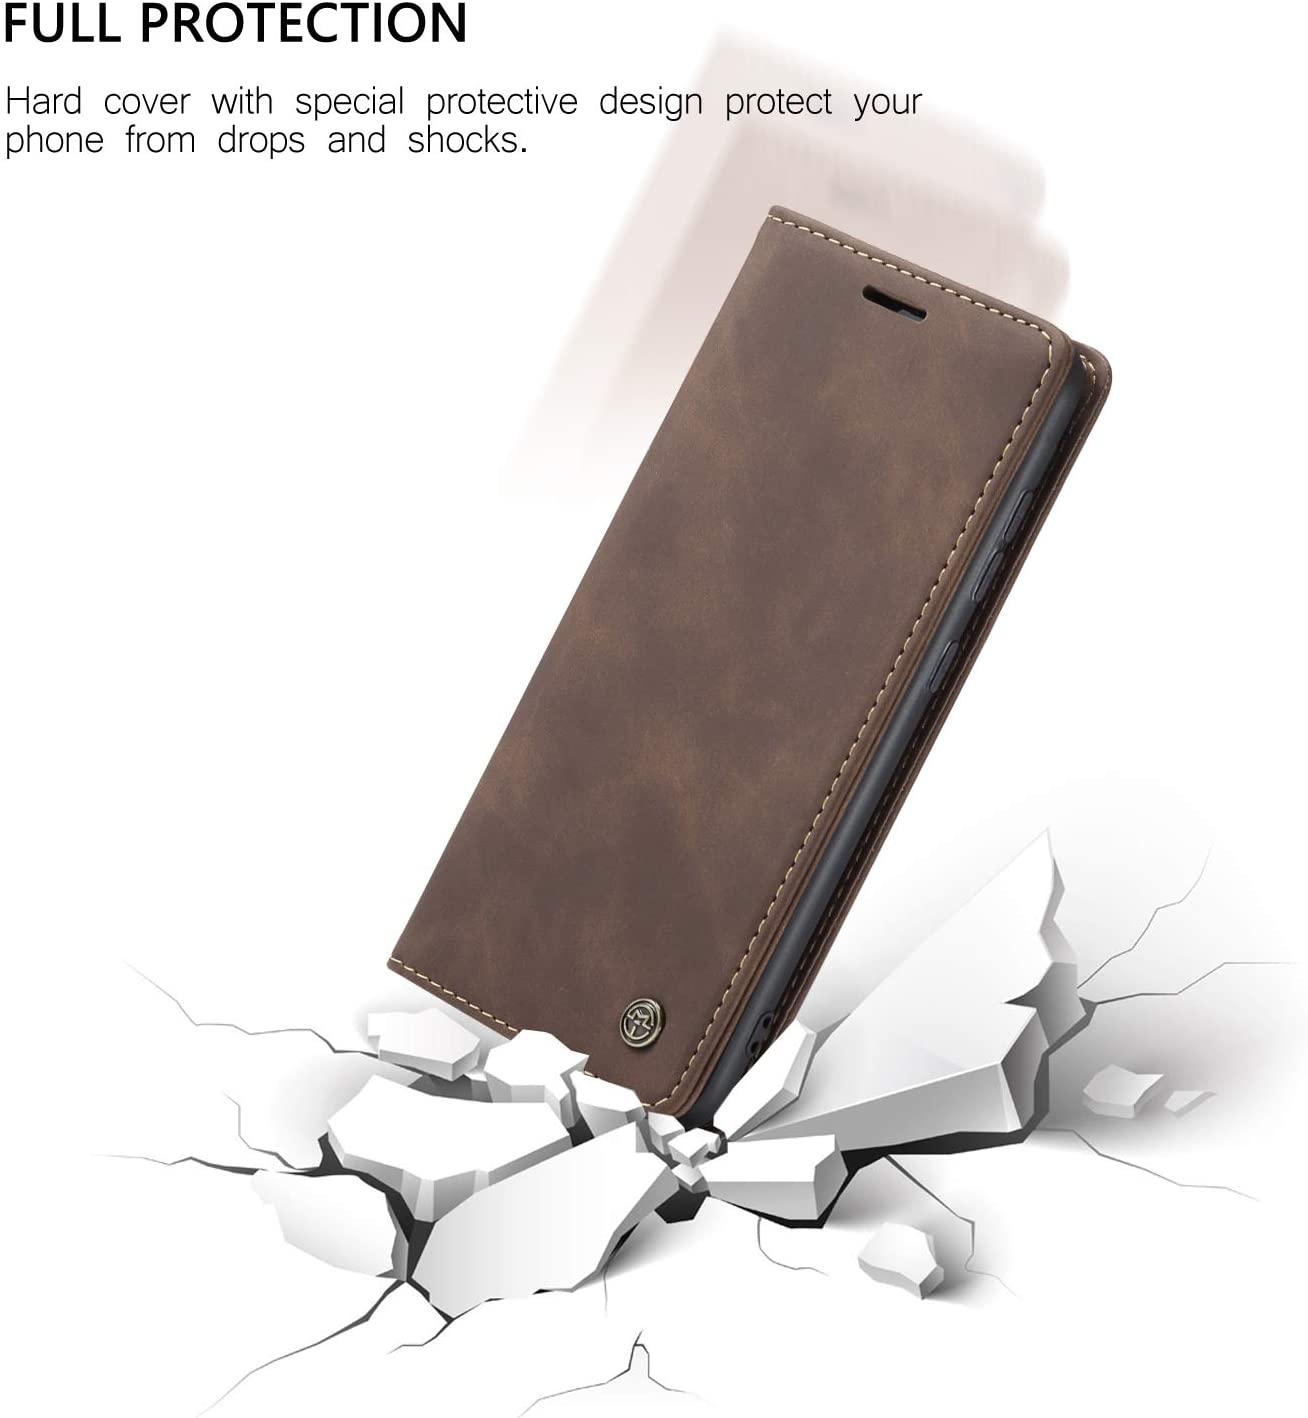 Samsung Galaxy C9 Pro shockproof cover